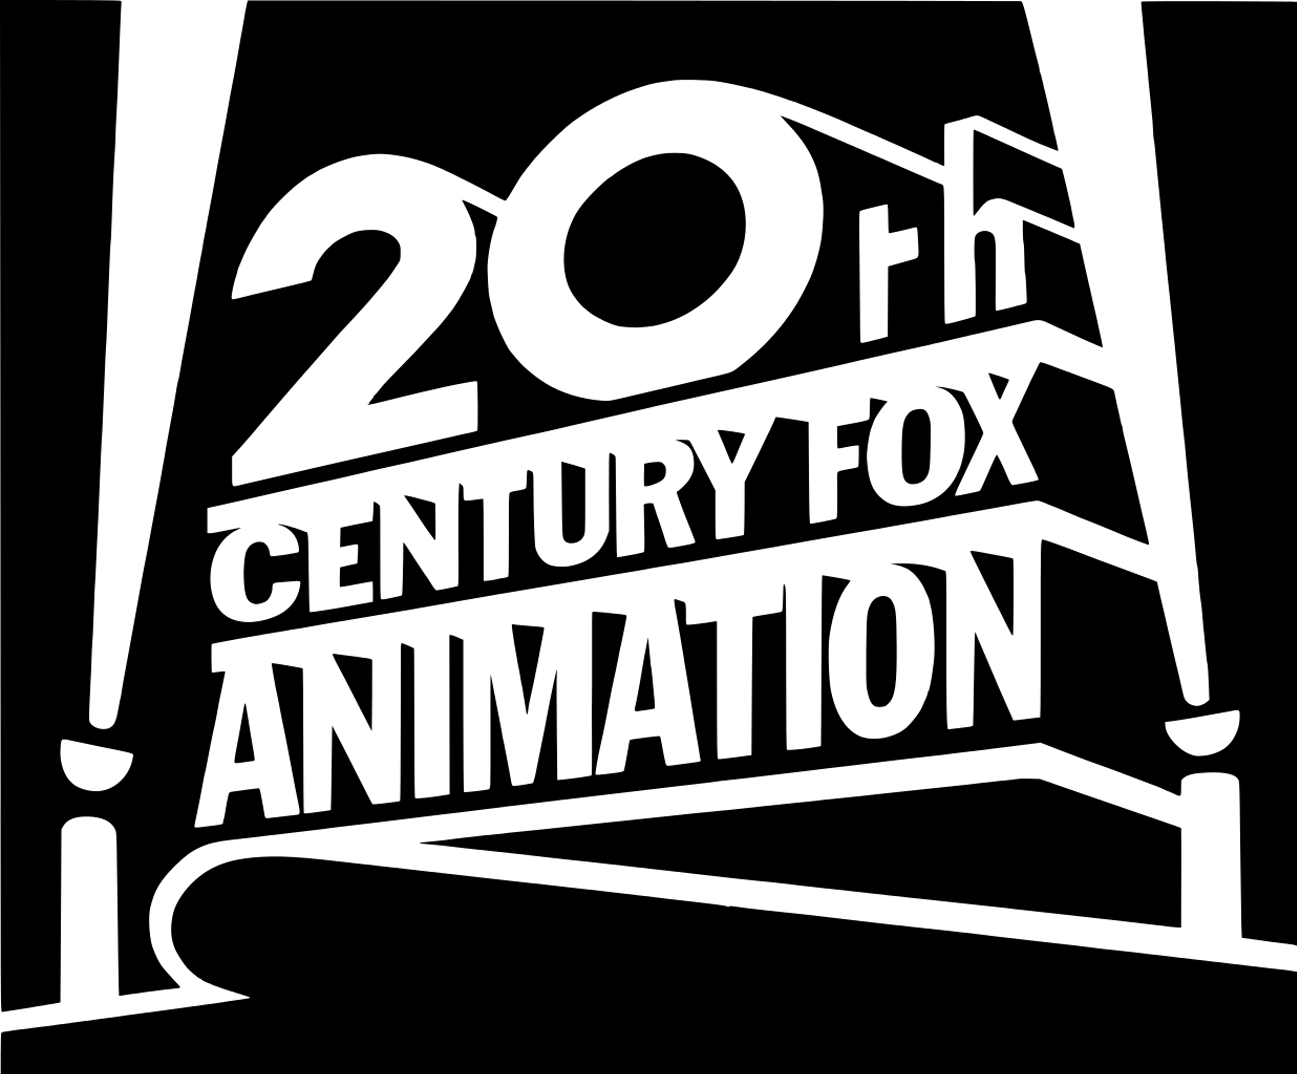 Century Fox Logo - 20th Century Fox Logo, 20th Century Fox Logo Symbol Meaning, History